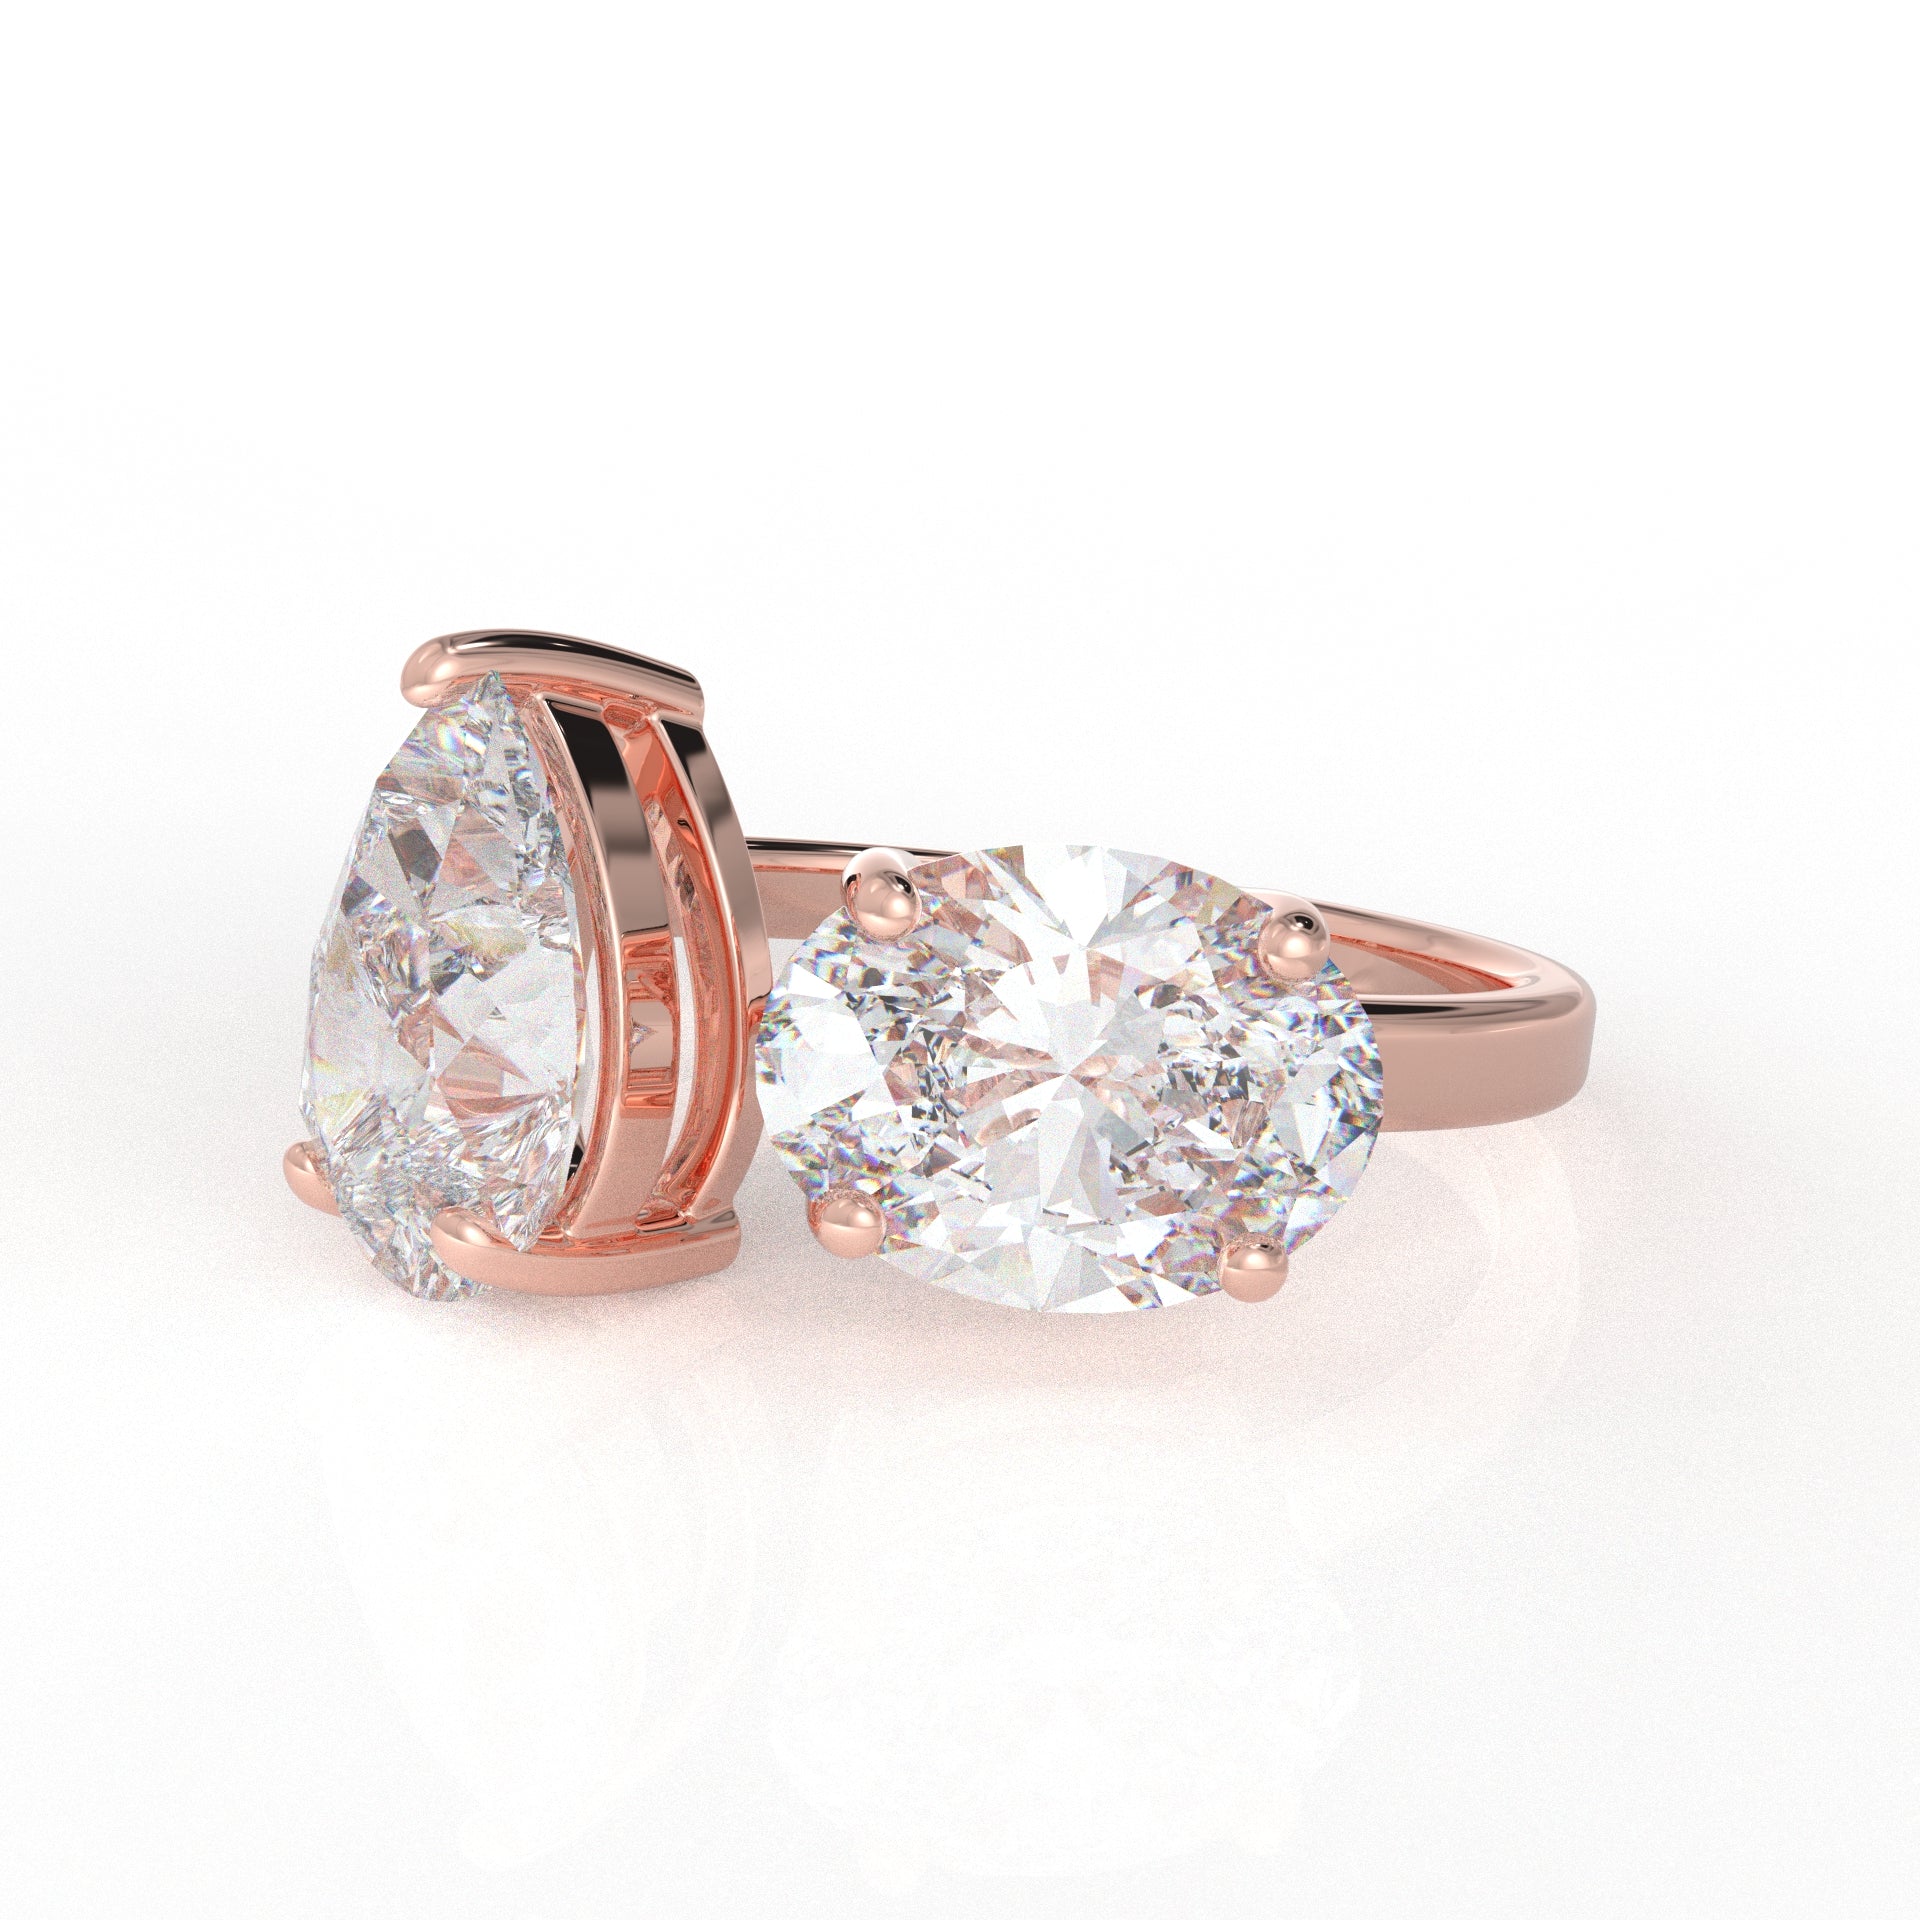 Elowen Ring - 2.29 Ct moissanite diamond